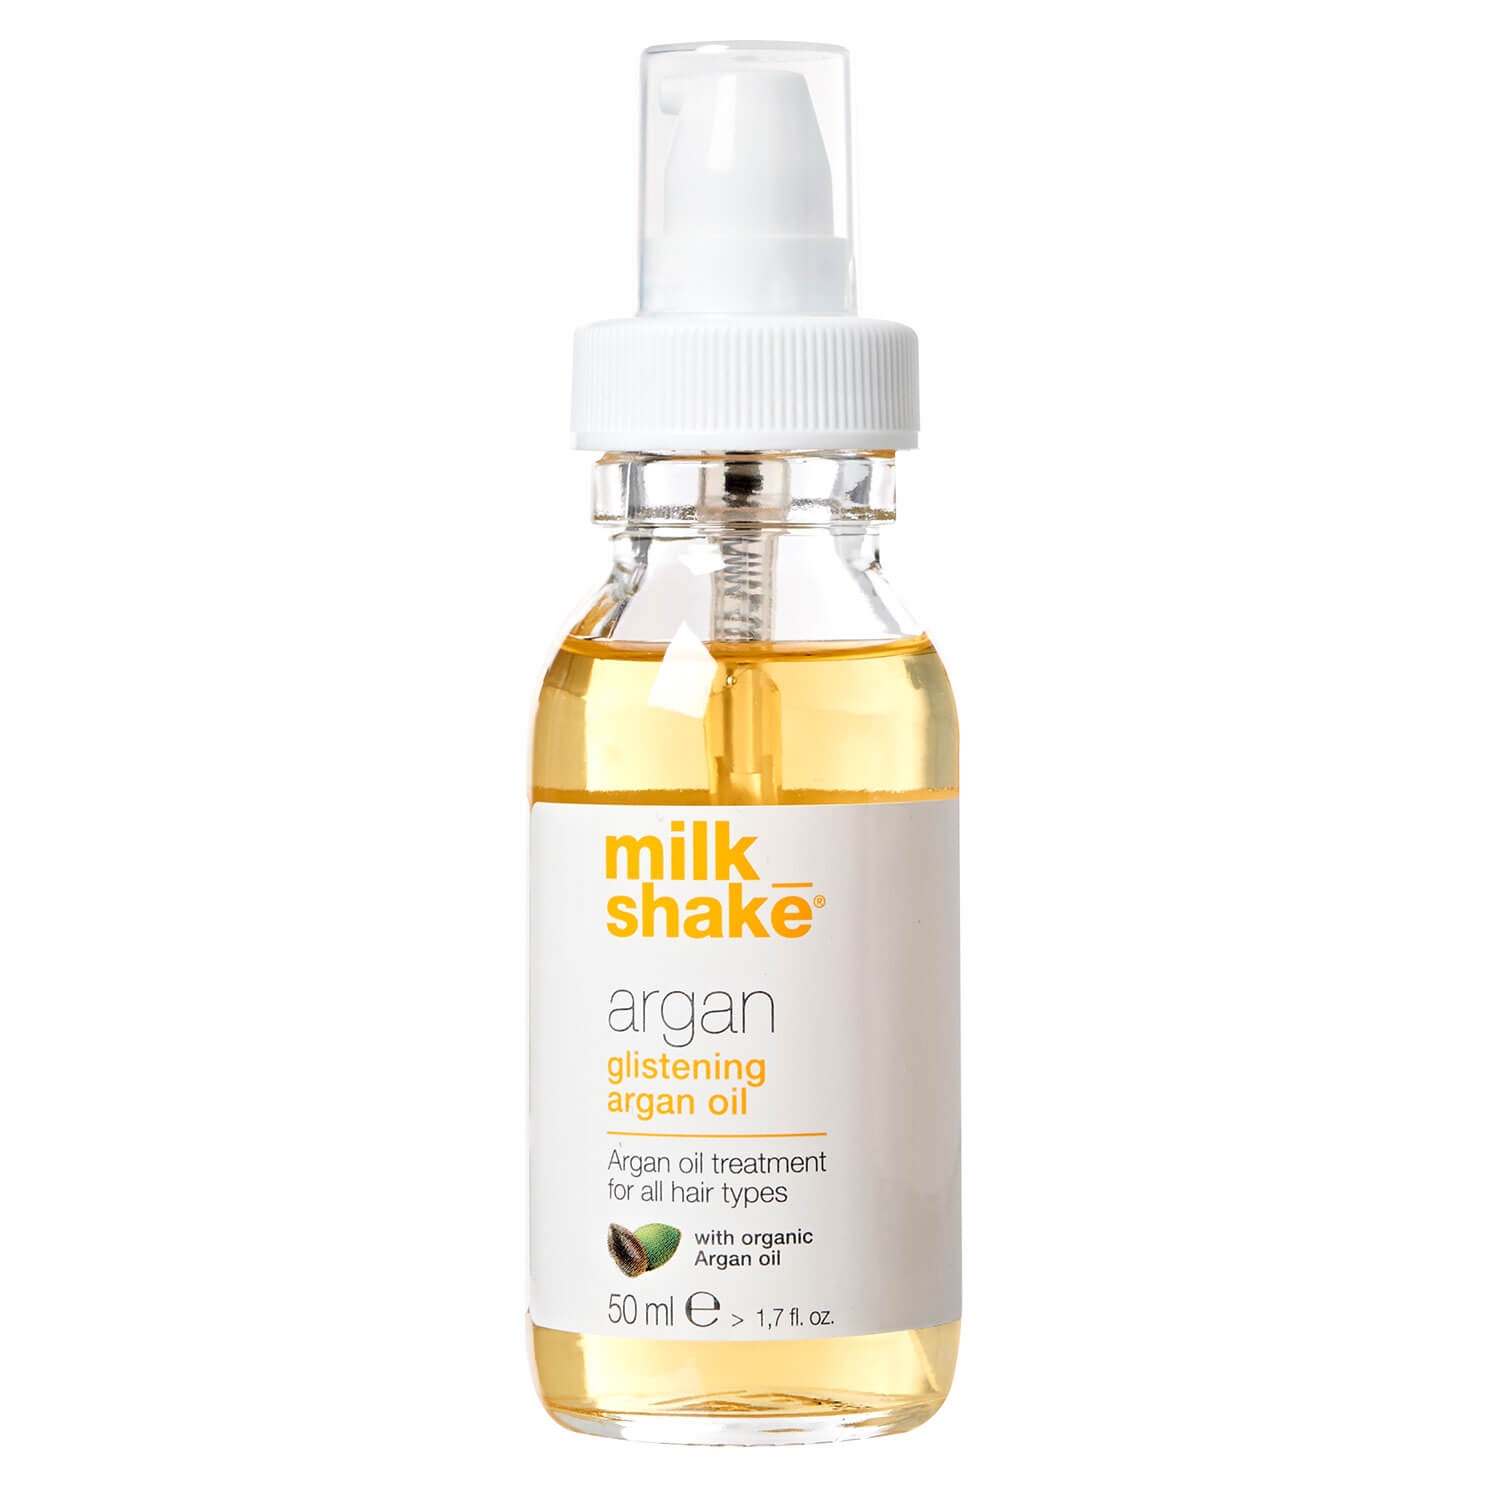 Product image from milk_shake argan - glistening argan oil